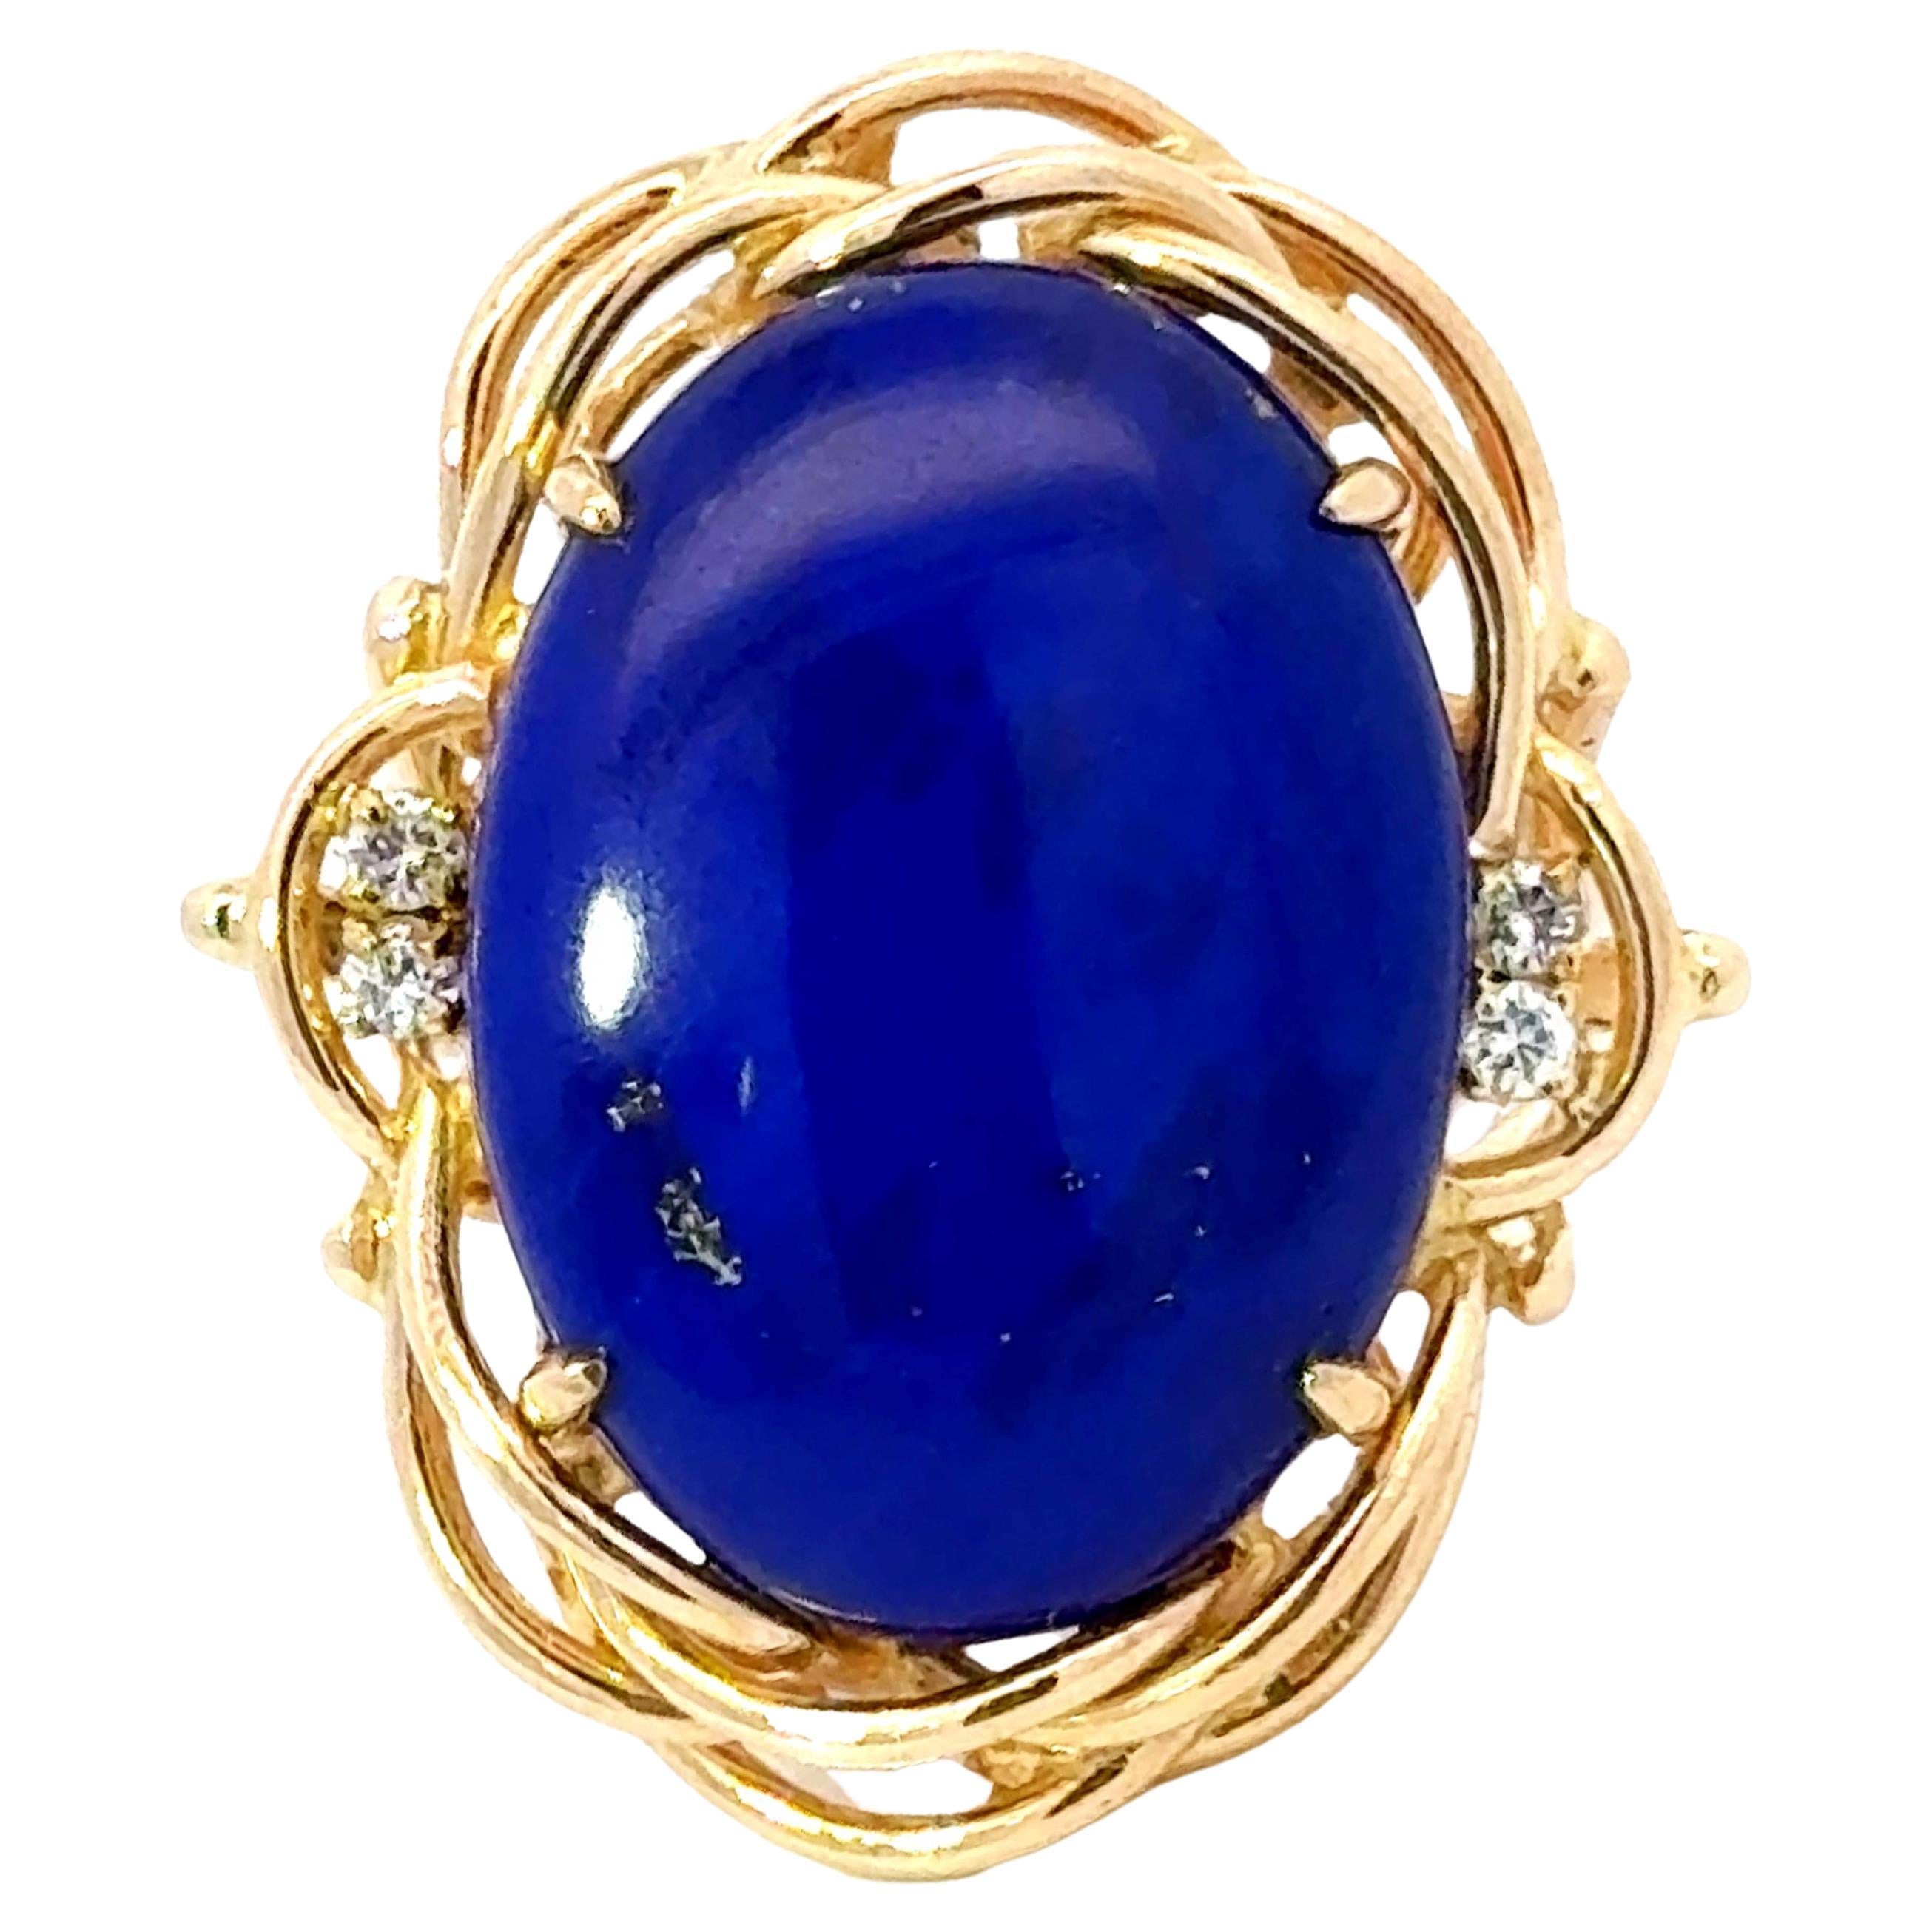 Large Oval Lapis Lazuli Diamond Cocktail Ring 14k Yellow Gold